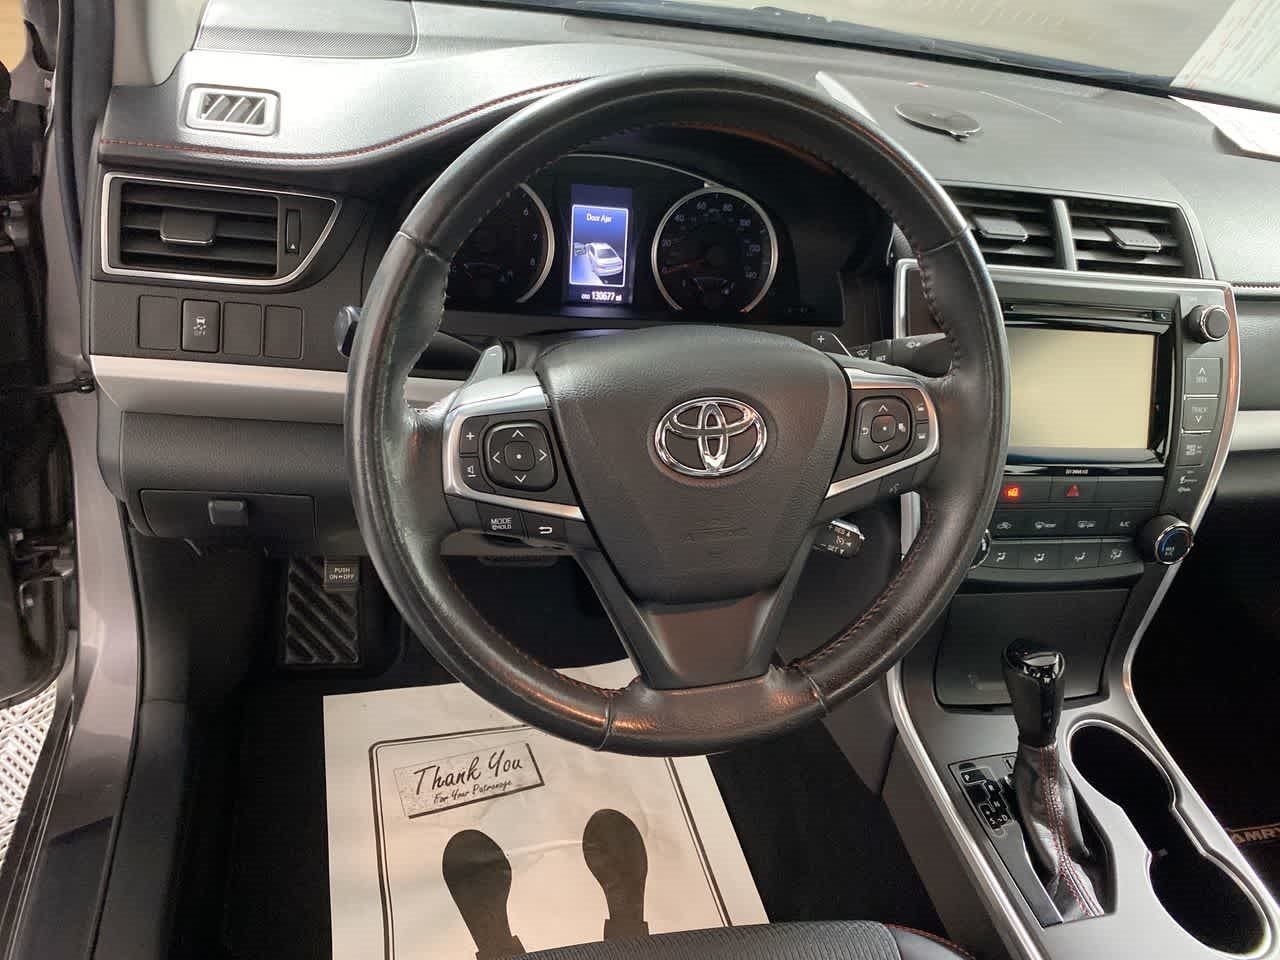 2016 Toyota Camry SE